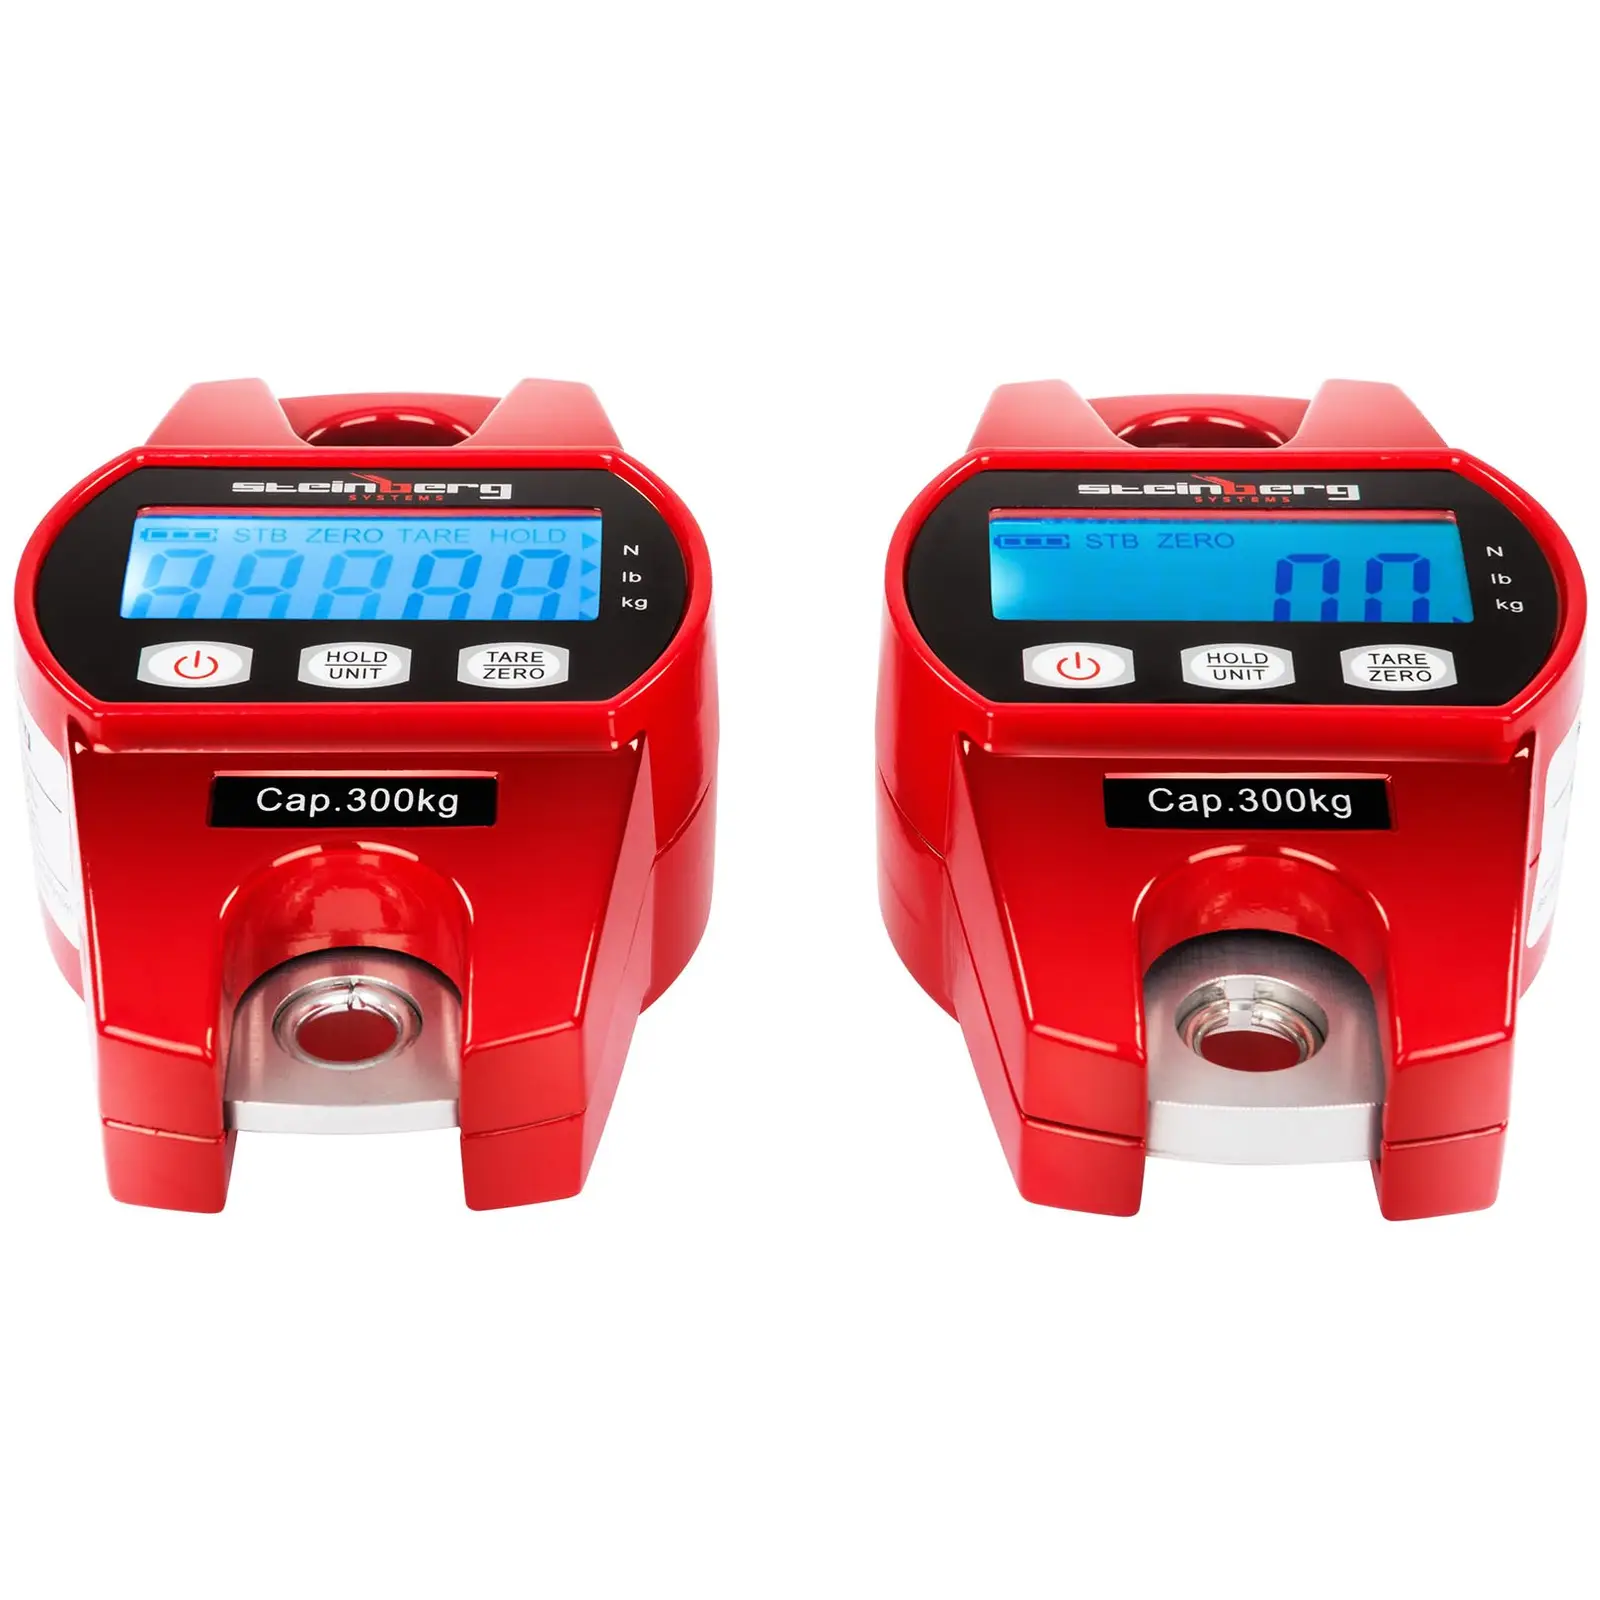 Dinamómetro digital - 300 kg / 100 g - rojo